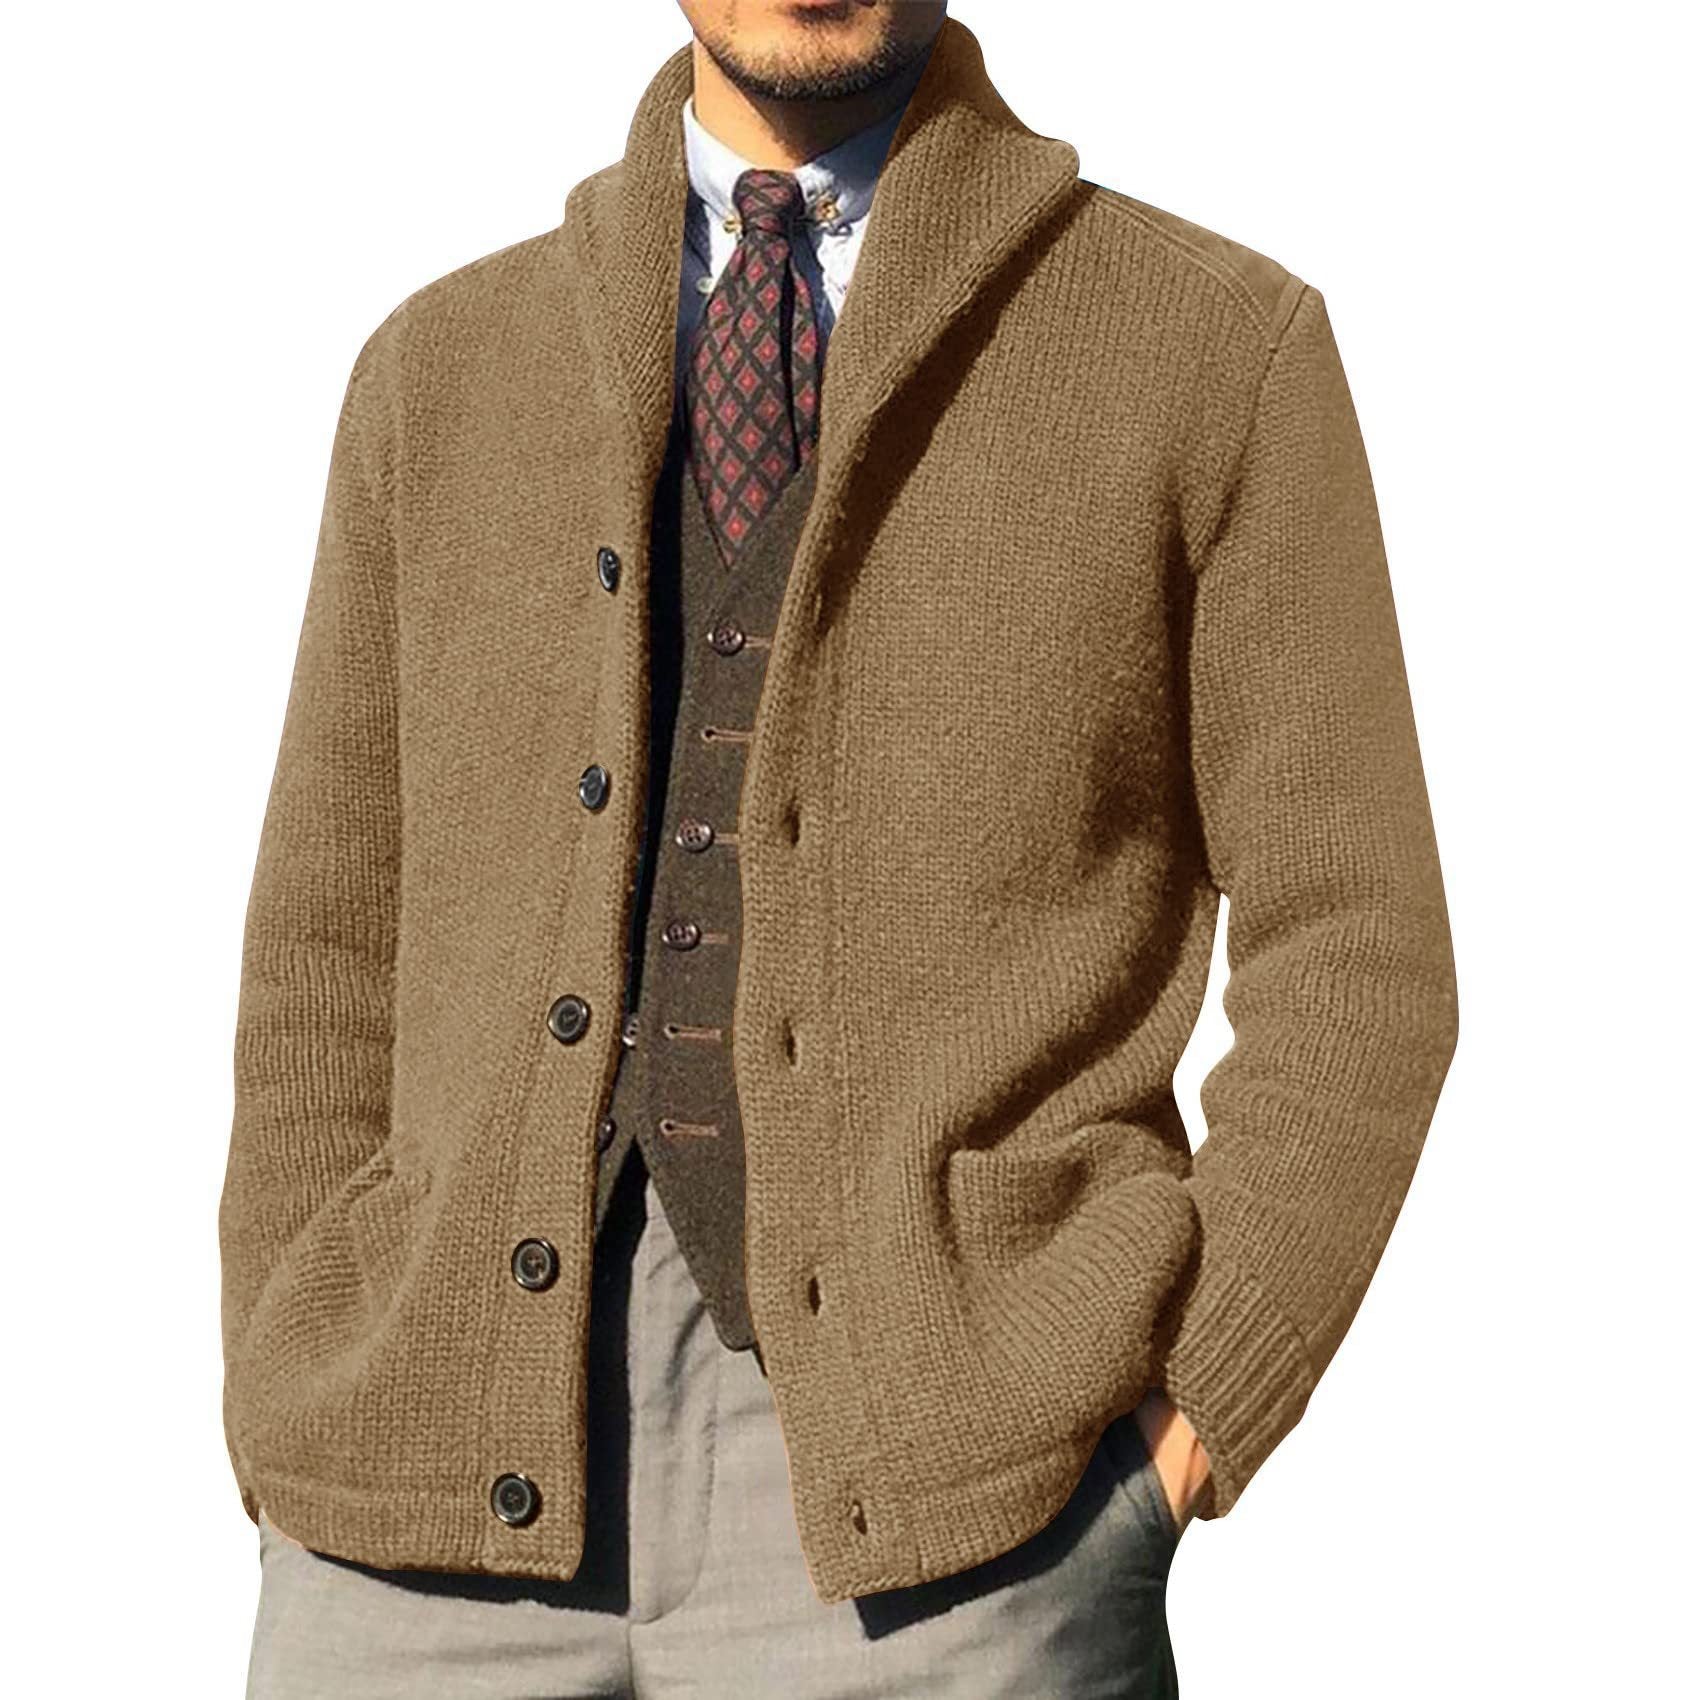 Men's Solid Color Gentleman Long Sleeve Knit Cardigan